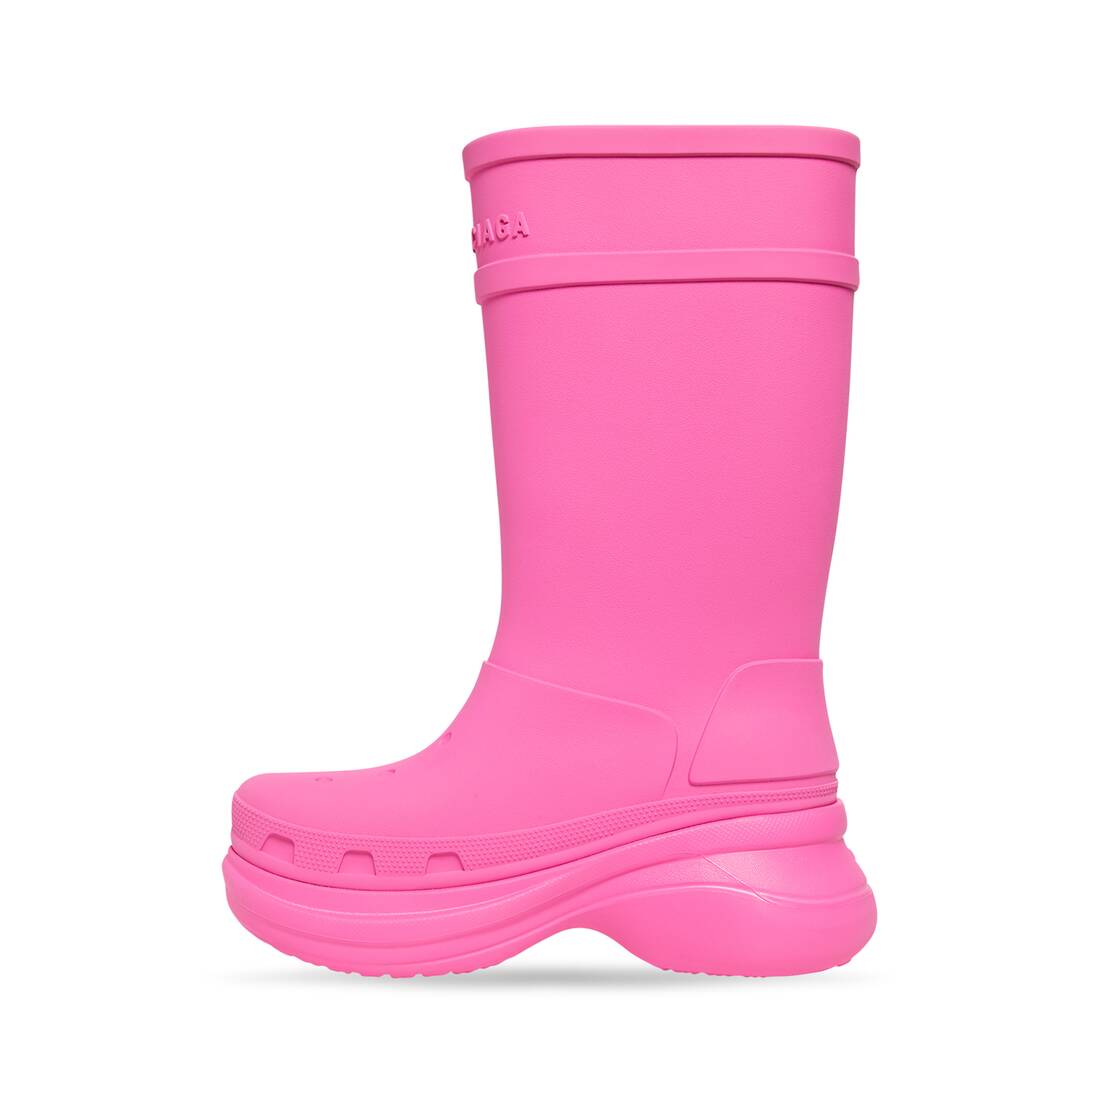 Balenciaga Women's Crocs Boot - Pink - Size 6